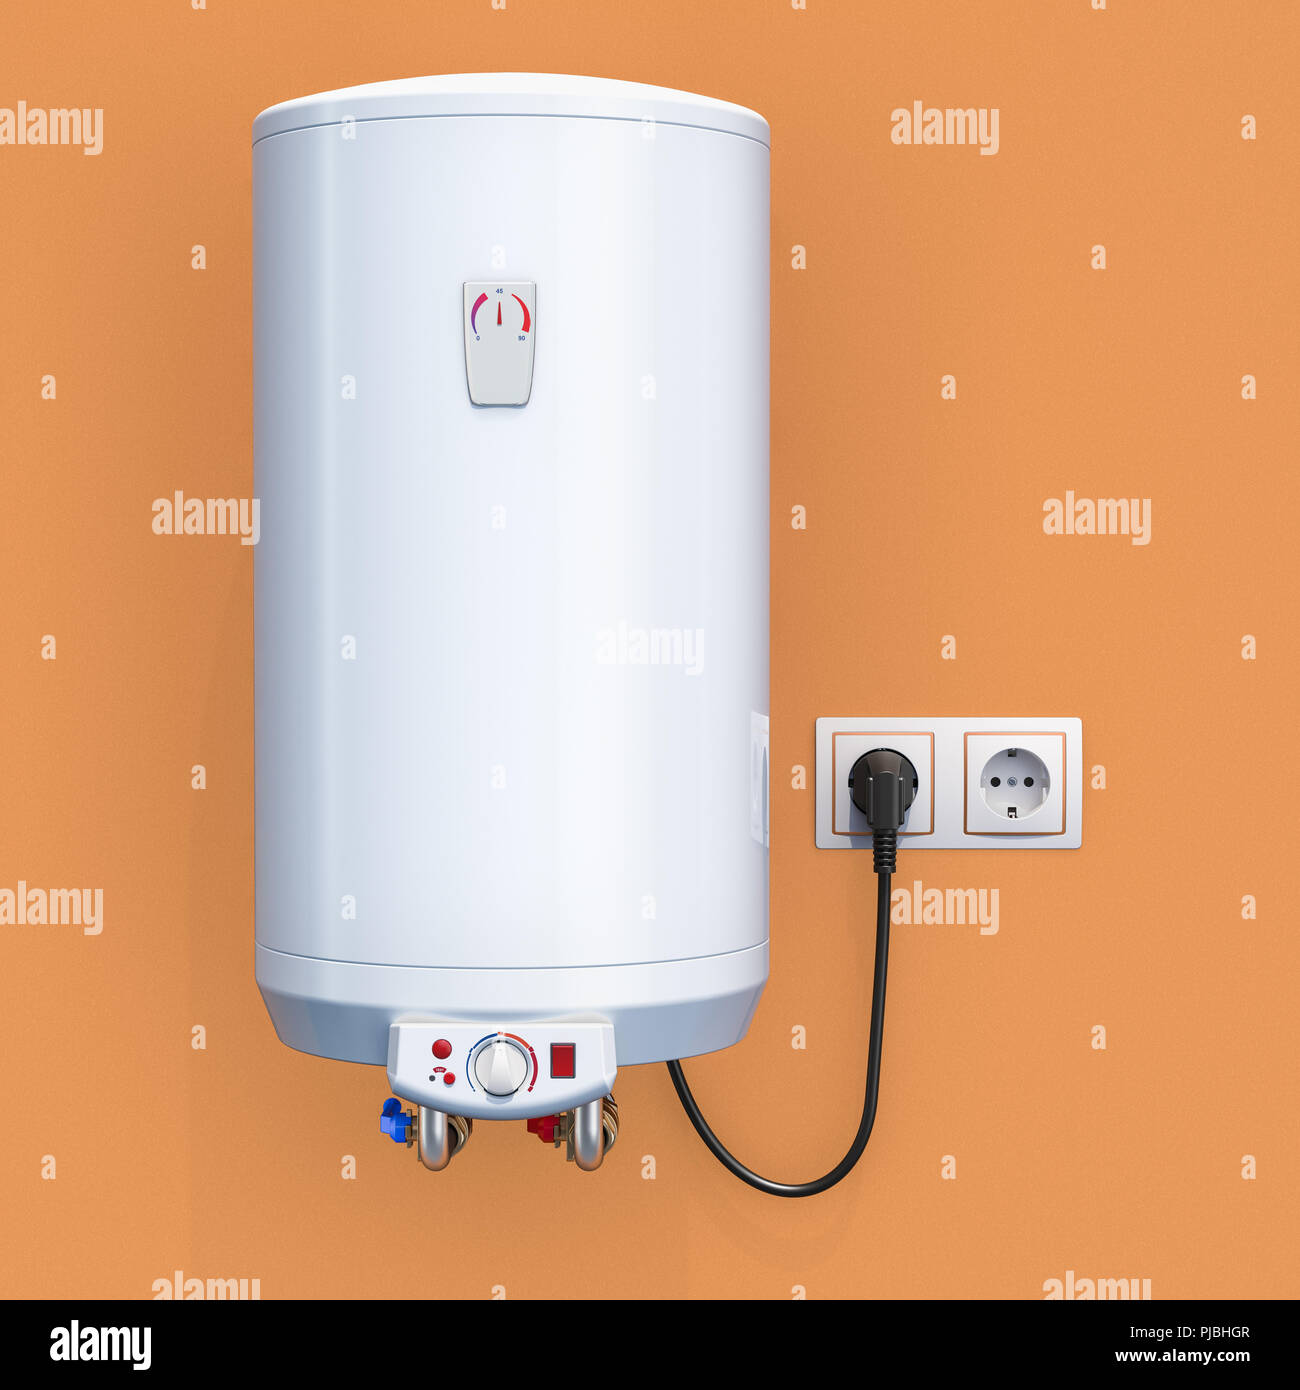 https://c8.alamy.com/comp/PJBHGR/white-tank-electric-water-heater-in-interior-3d-rendering-PJBHGR.jpg